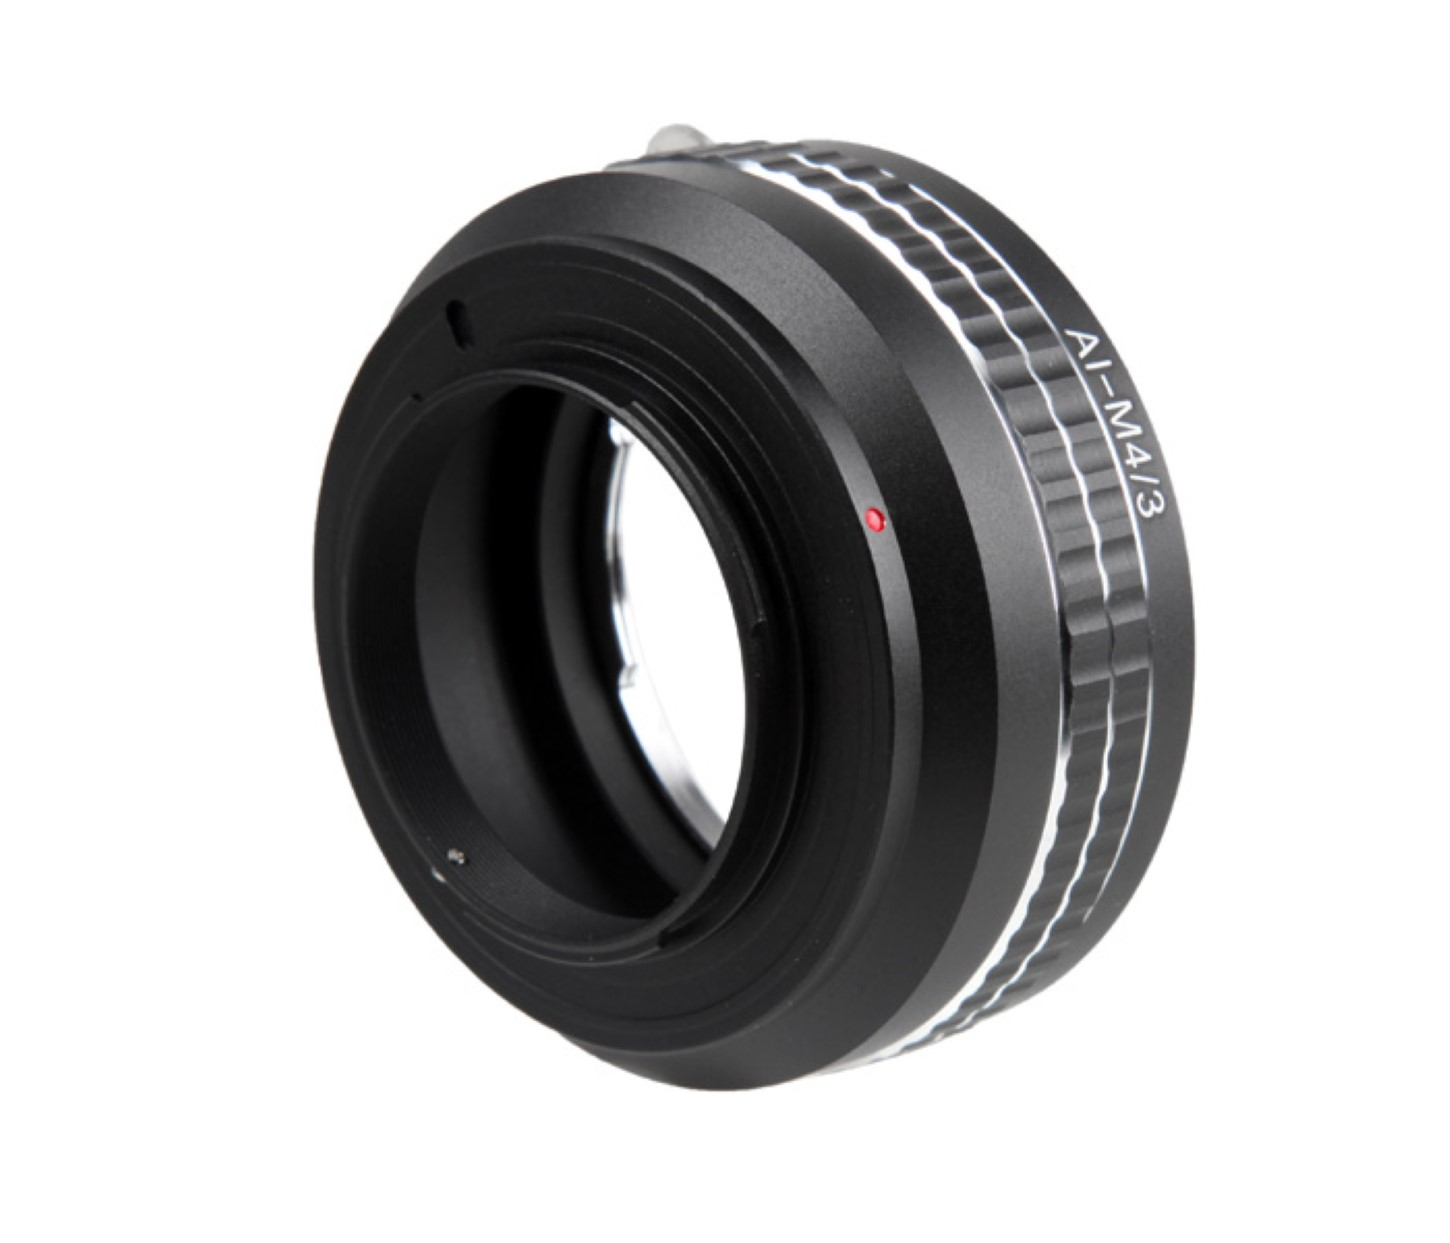 AYEX Nikon F-Objektive Adapter, Black Thirds Micro Adapter, Four an